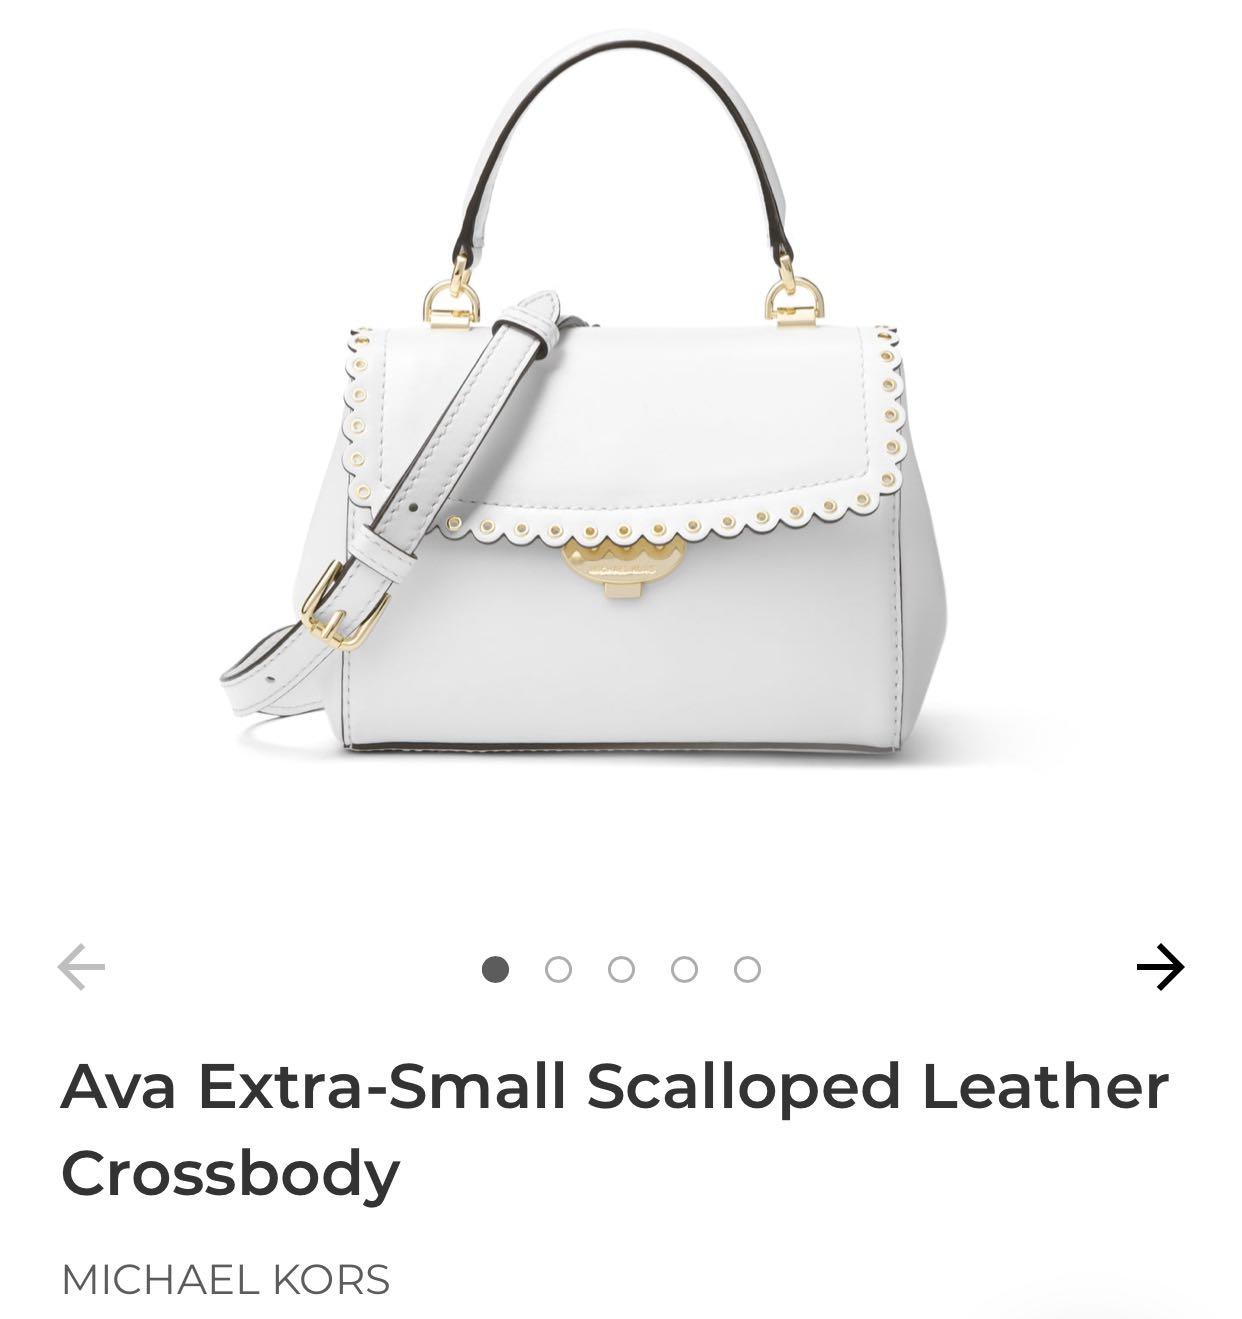 BNWT Michael Kors Ava small bag scalloped leather crossbody bag in